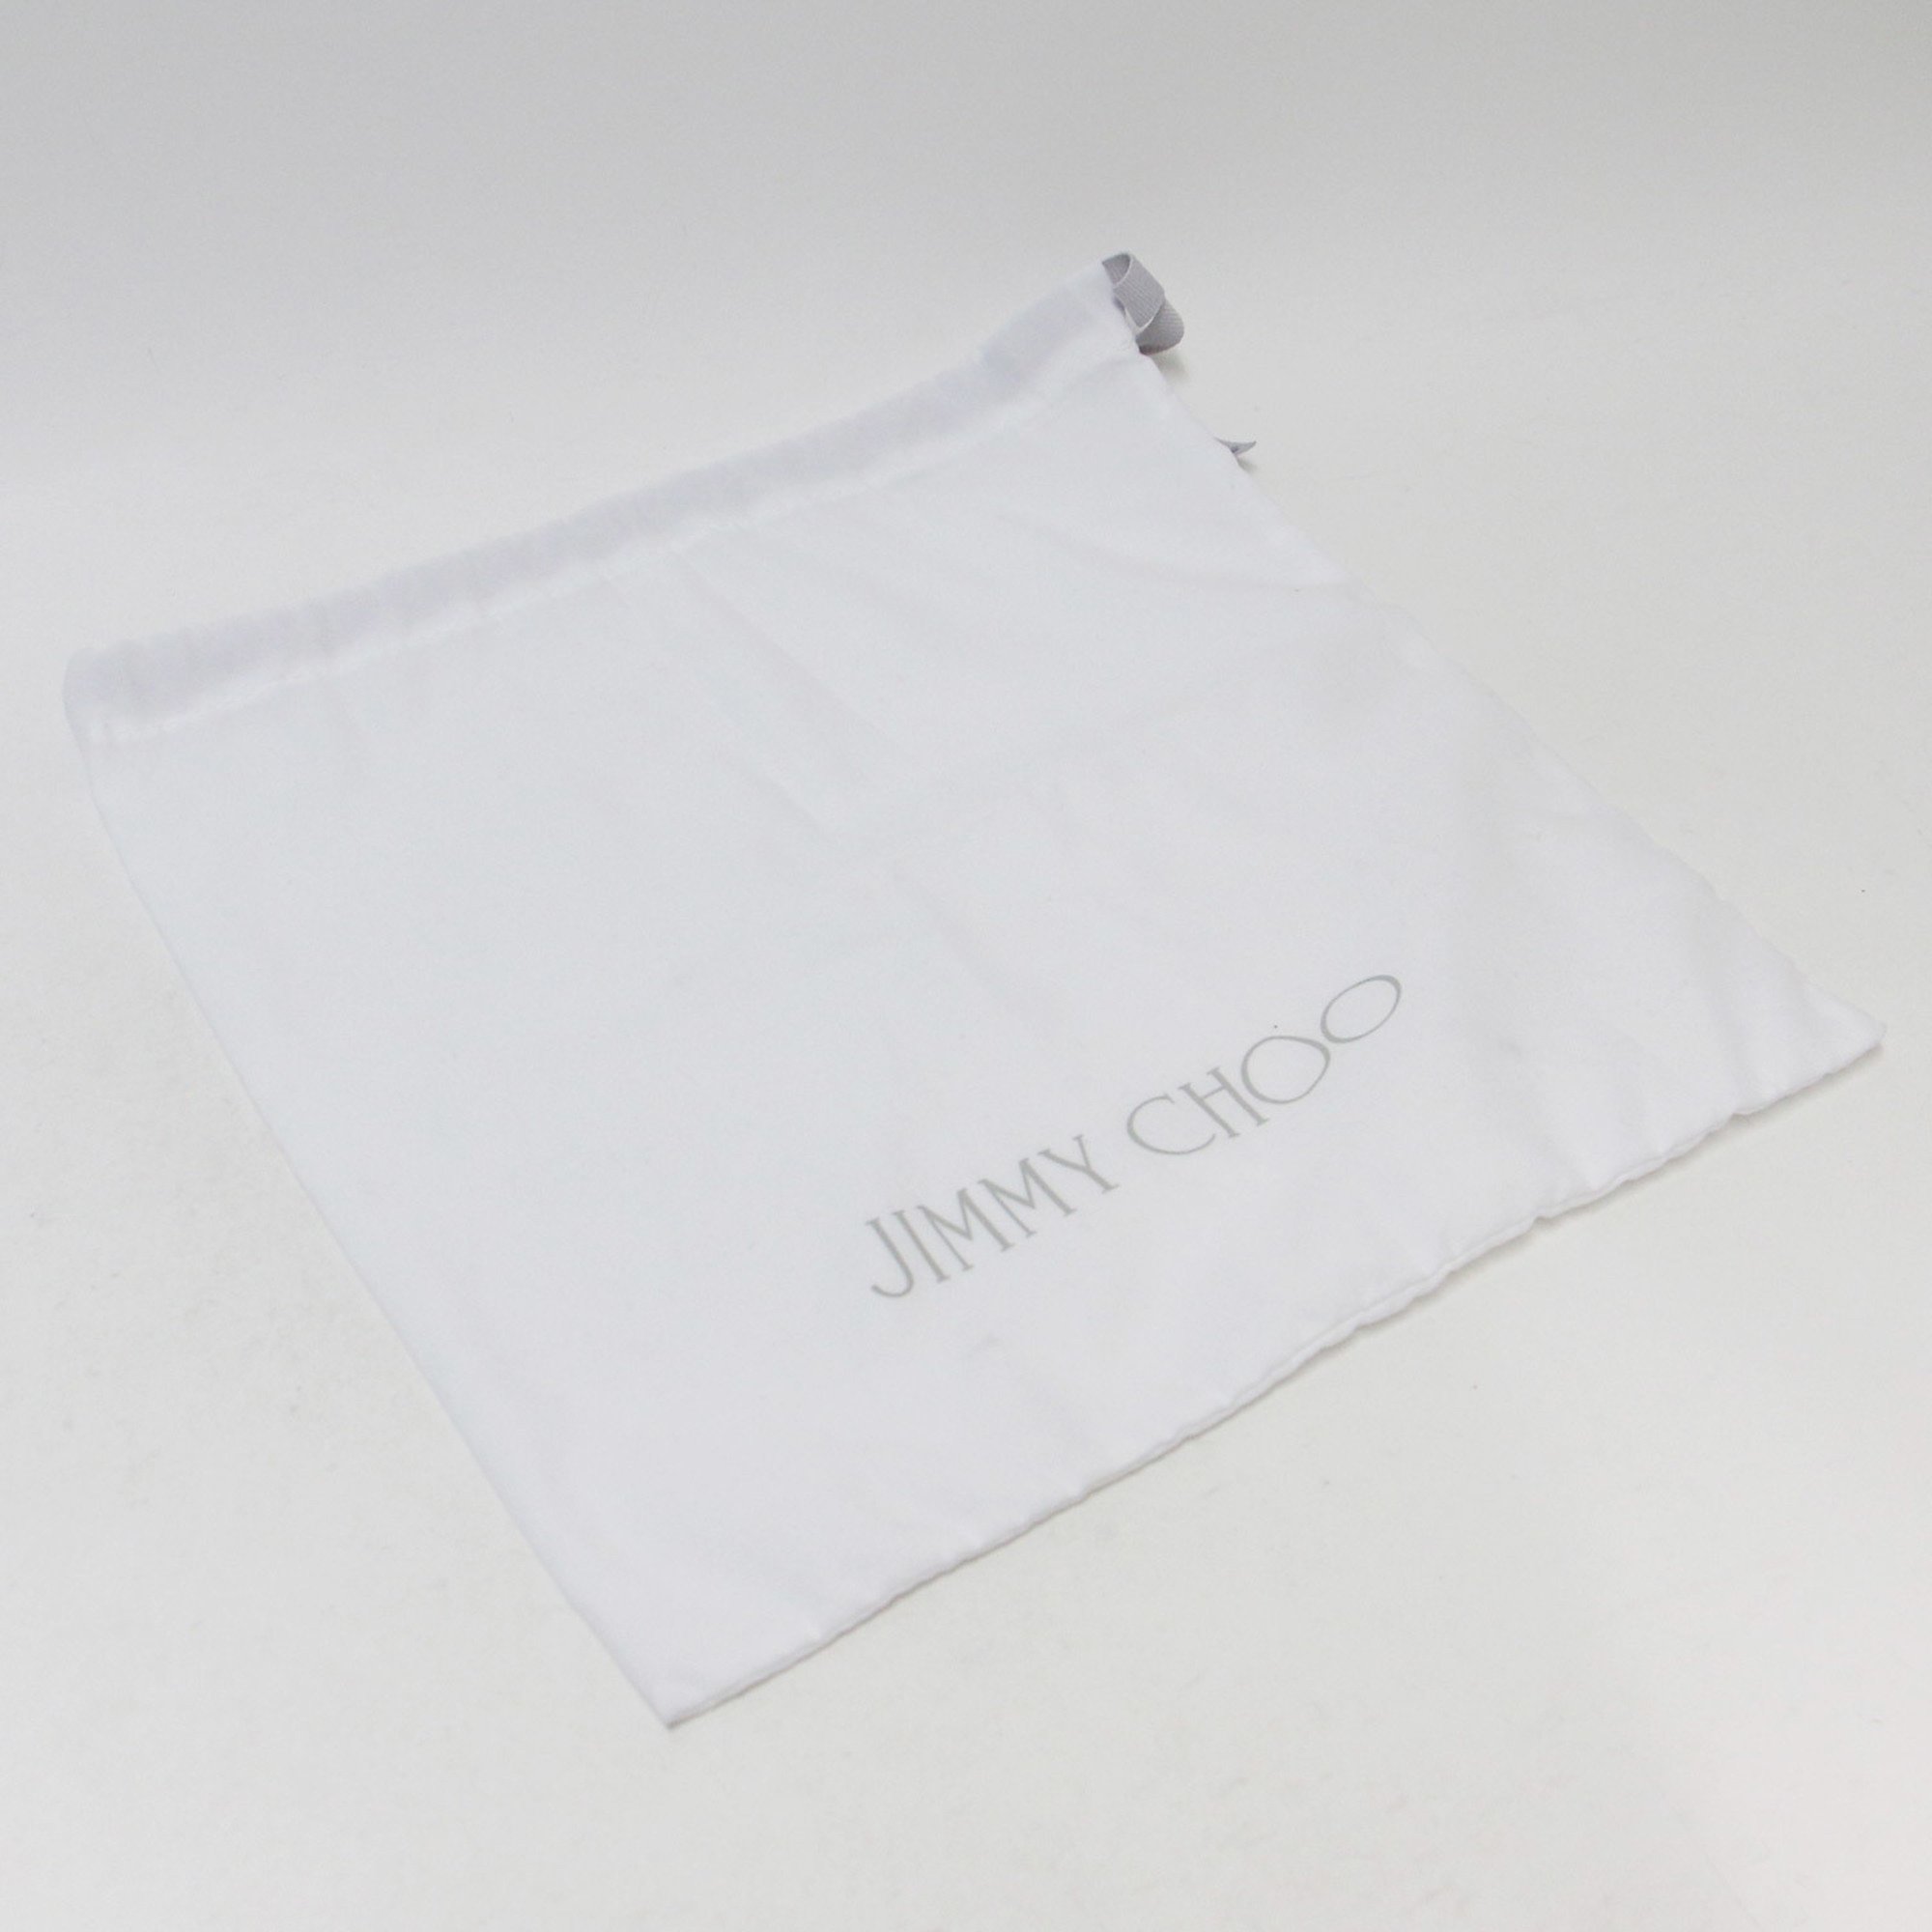 JIMMY CHOO Jimmy Choo Bag Handbag Shoulder Black Pixis Studs Flap Embossed Combination Leather